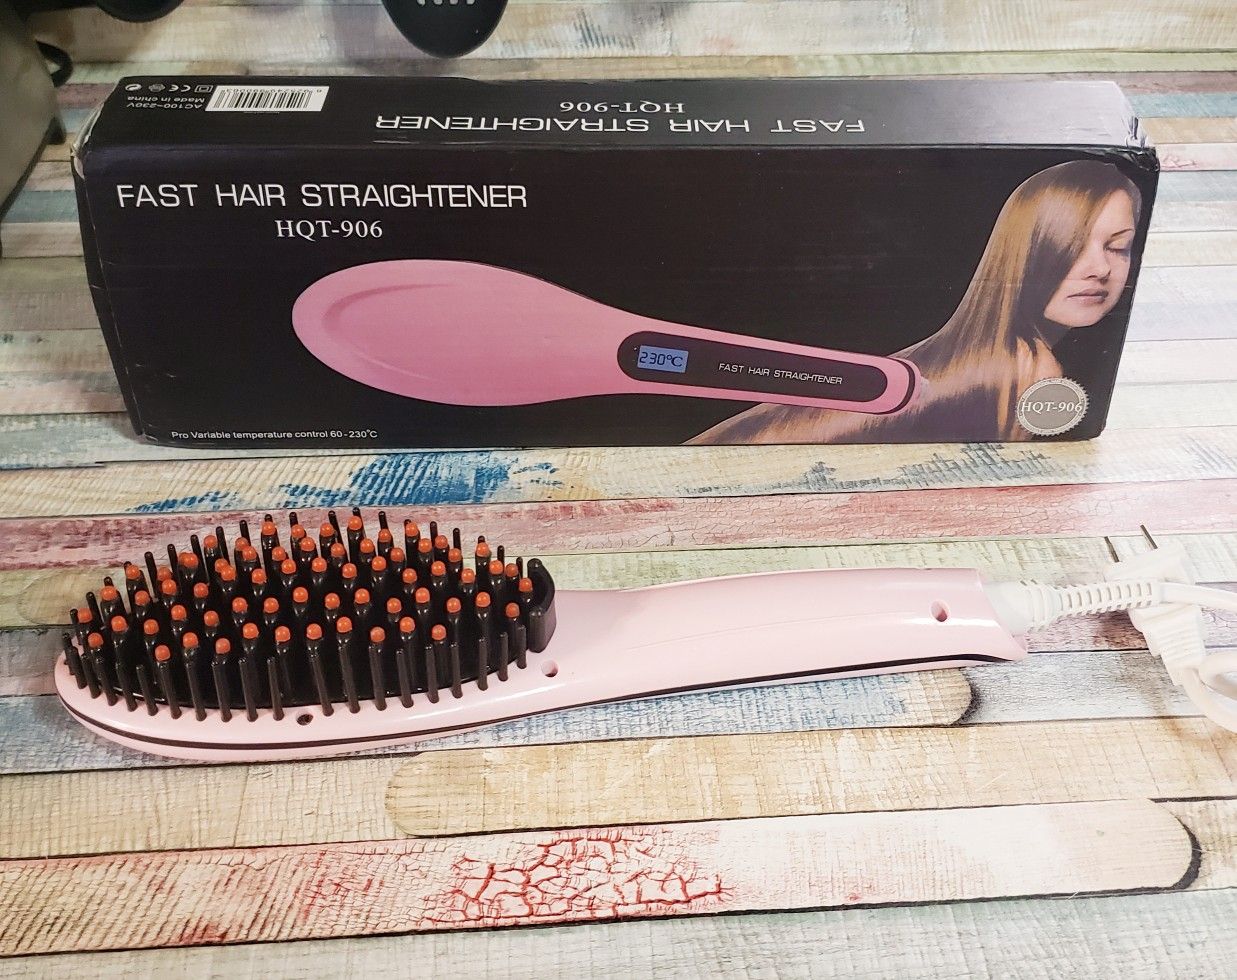 Hair Straightener